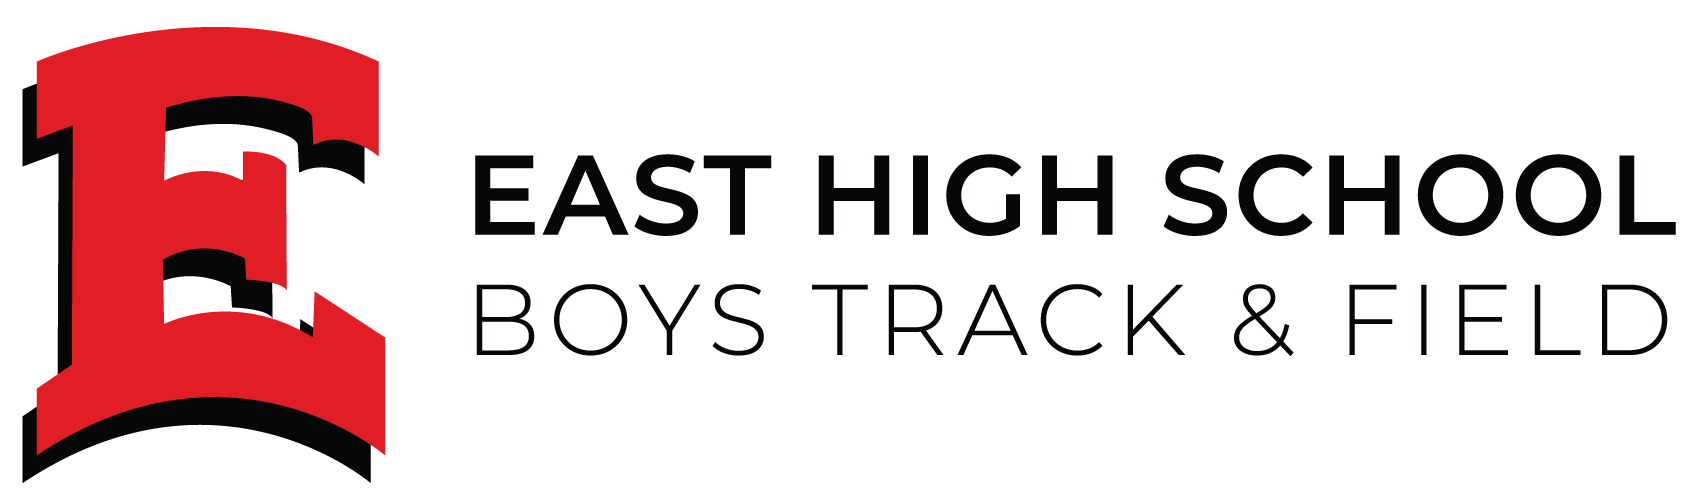 East High School Track